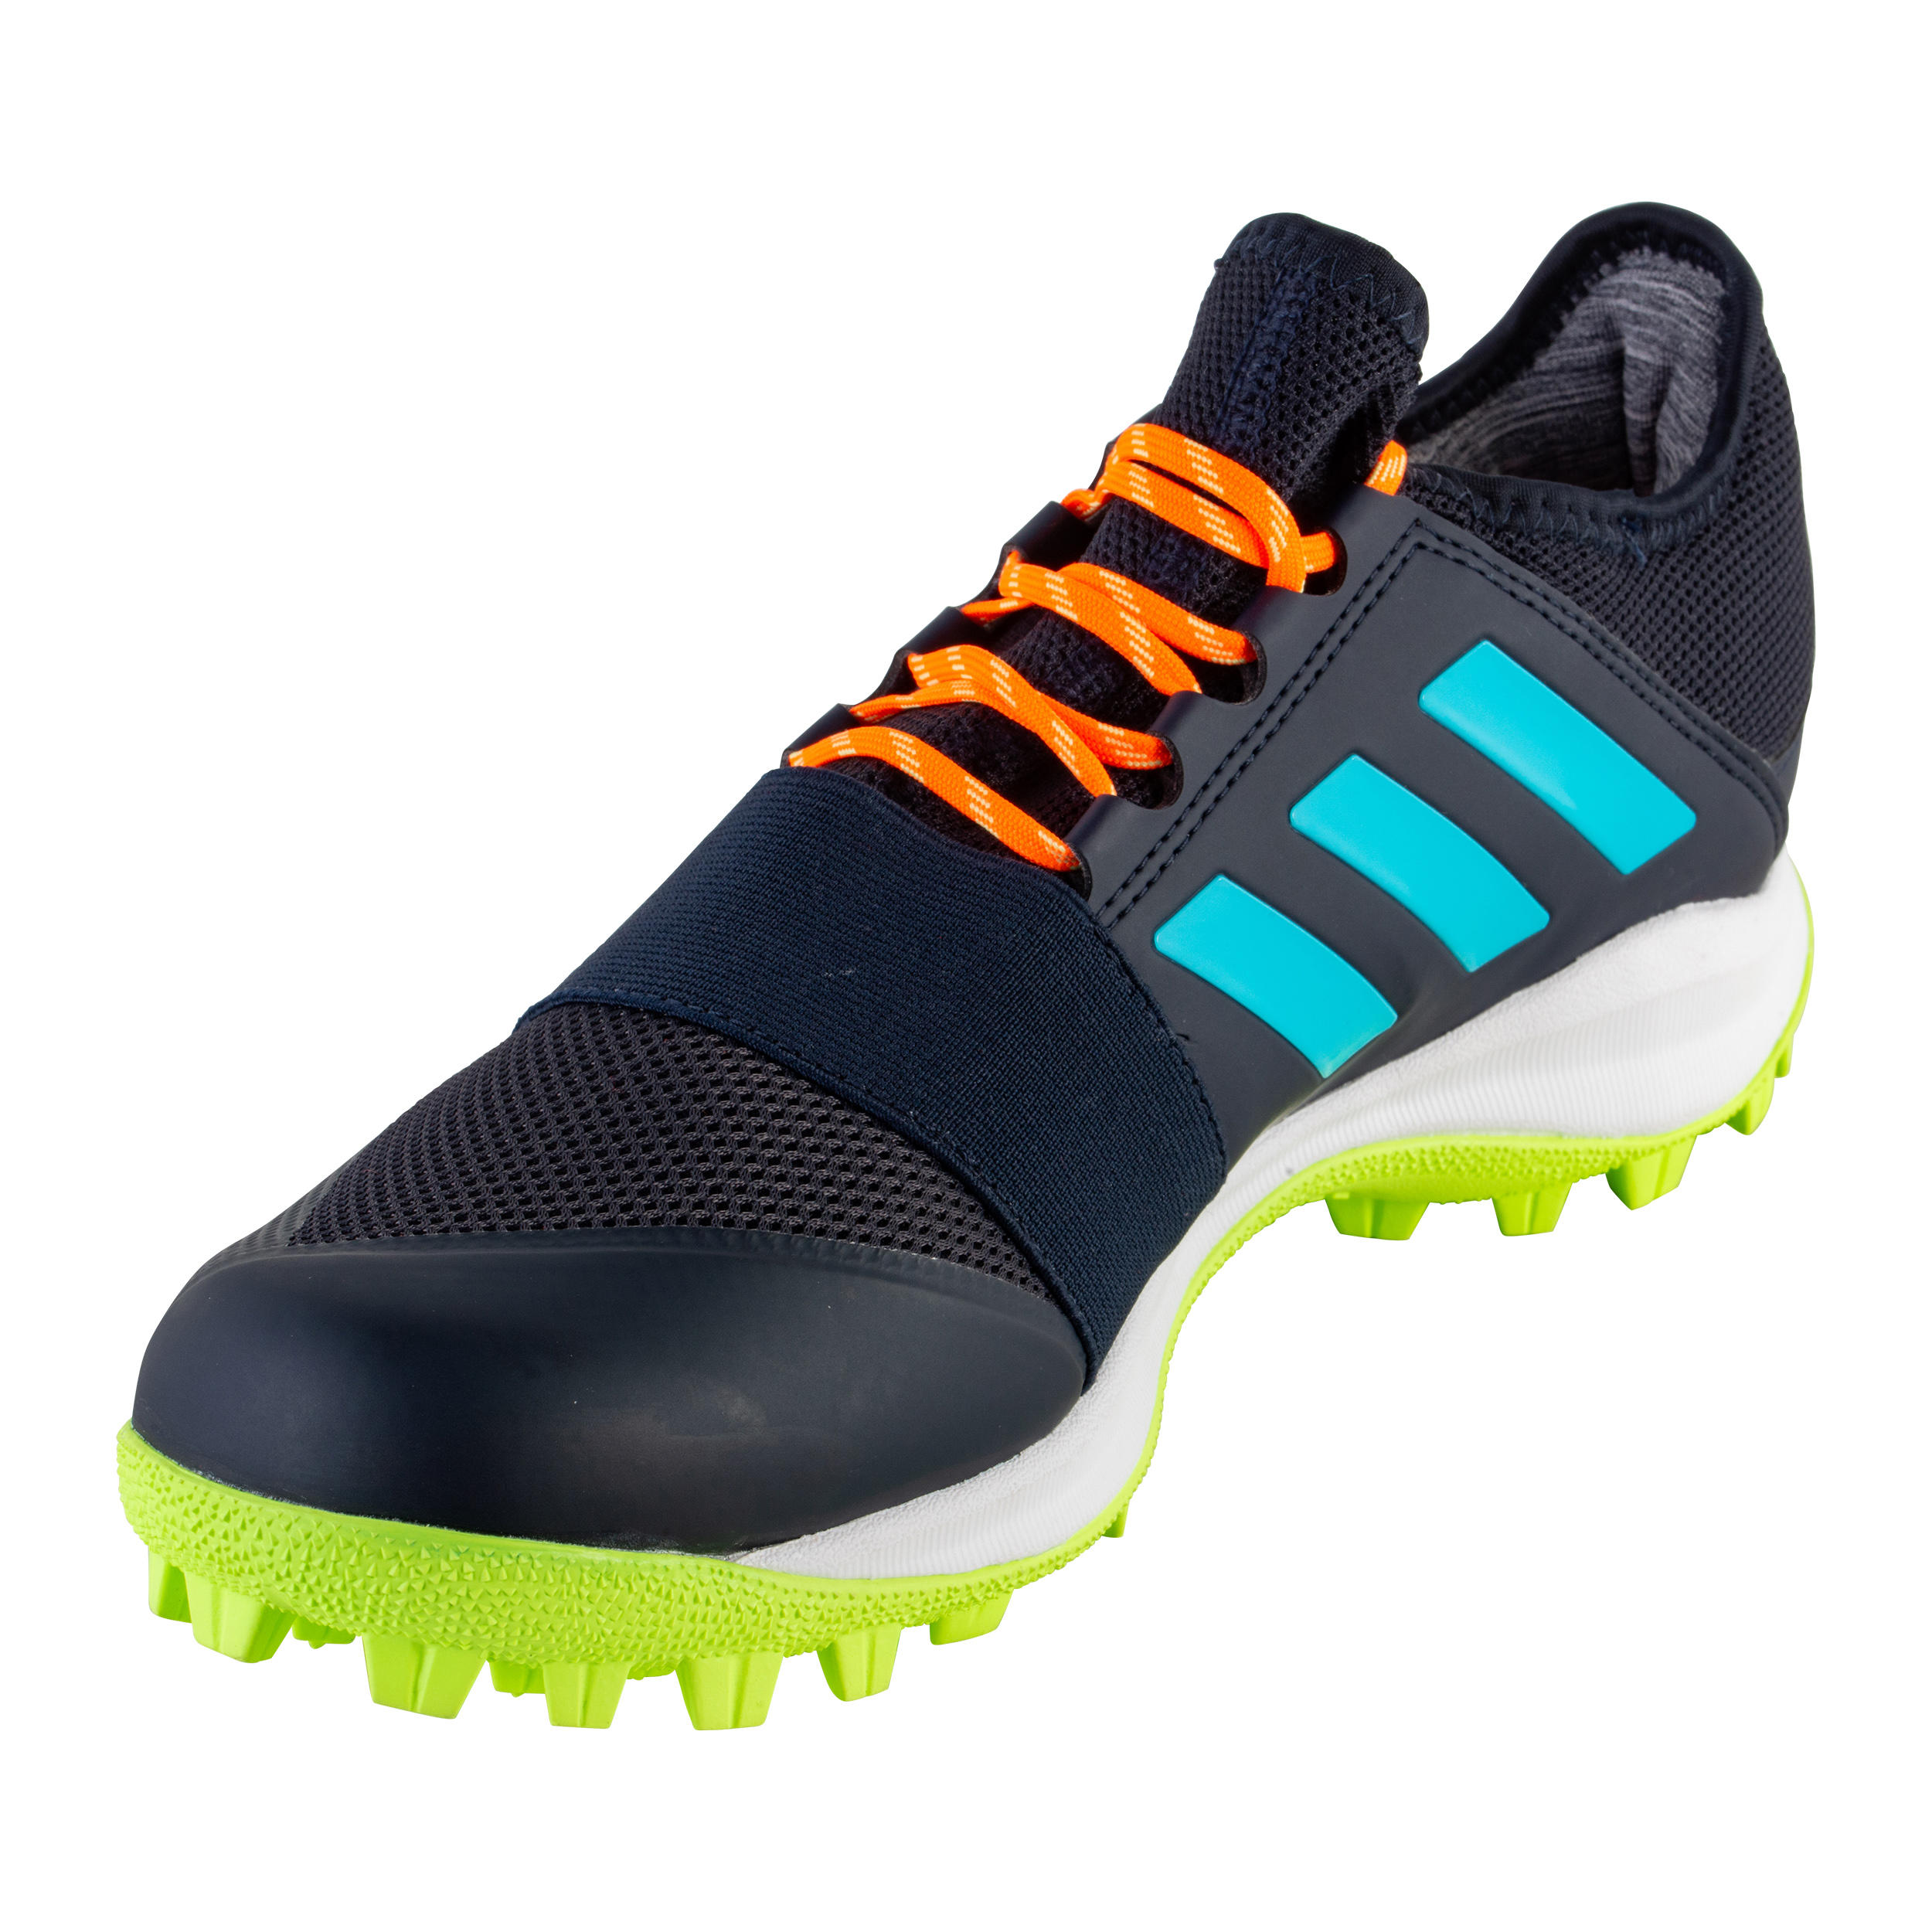 Adult Moderate-Intensity Field Hockey Shoes Divox 1.9S - Navy/Orange 6/7